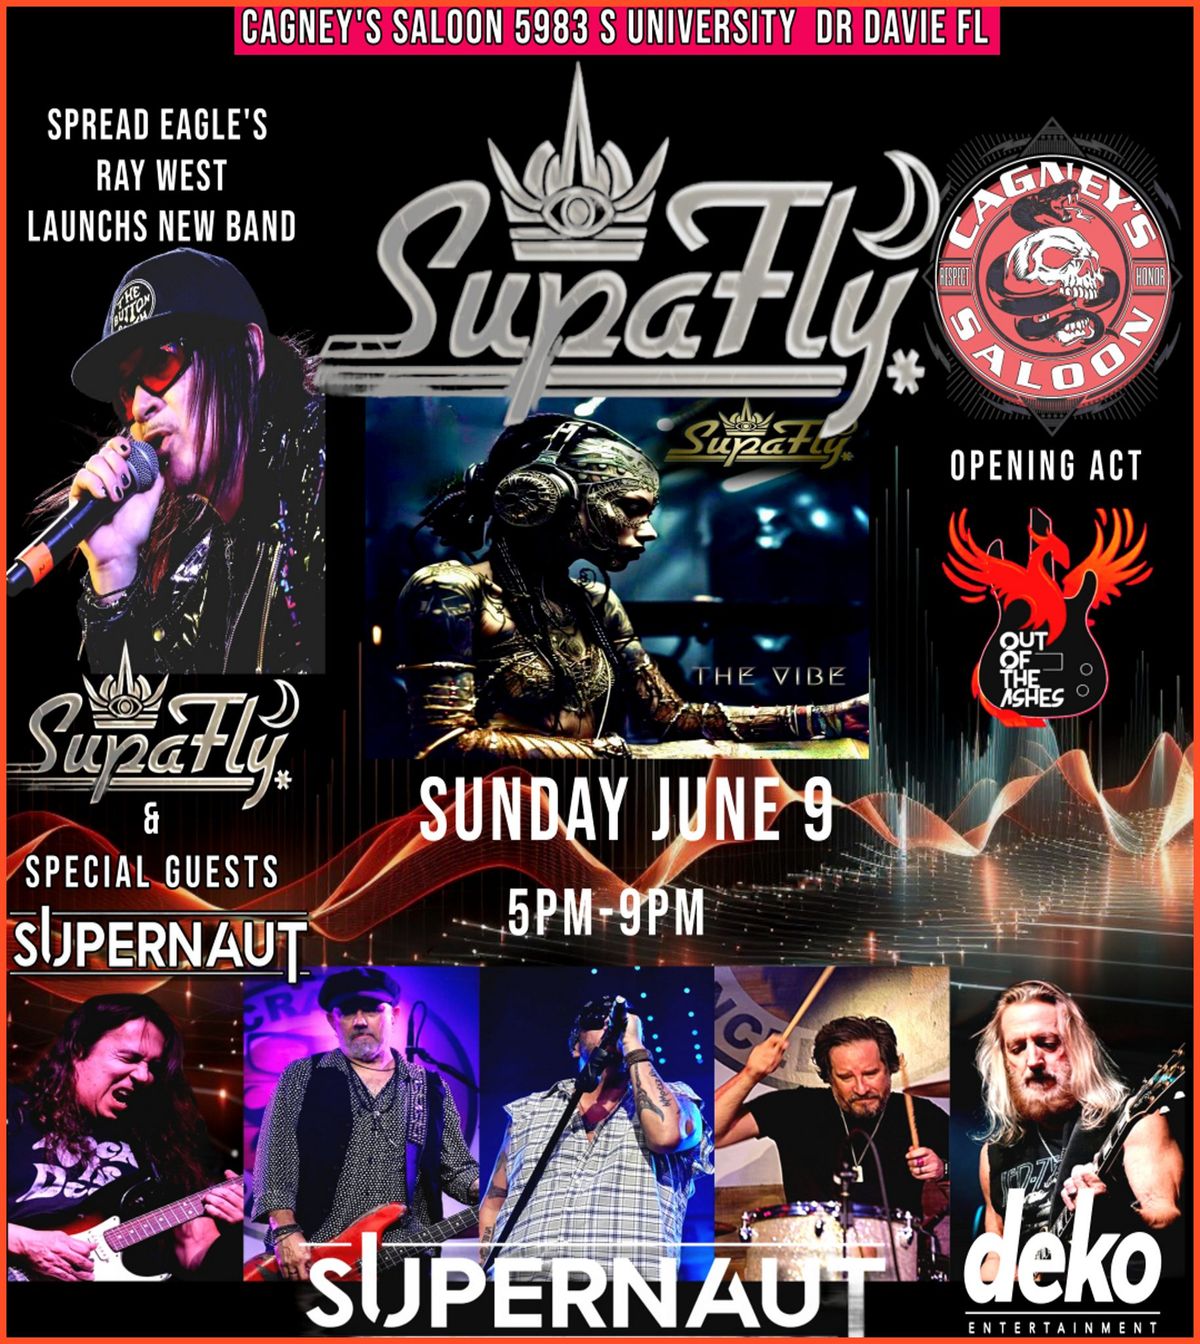 \u2b50\ud83c\udfb5 SupaFly & Supernaut Exclusive Show at Cagneys Saloon  Sunday June 9 from 5pm-9pm\ud83c\udfb5\u2b50